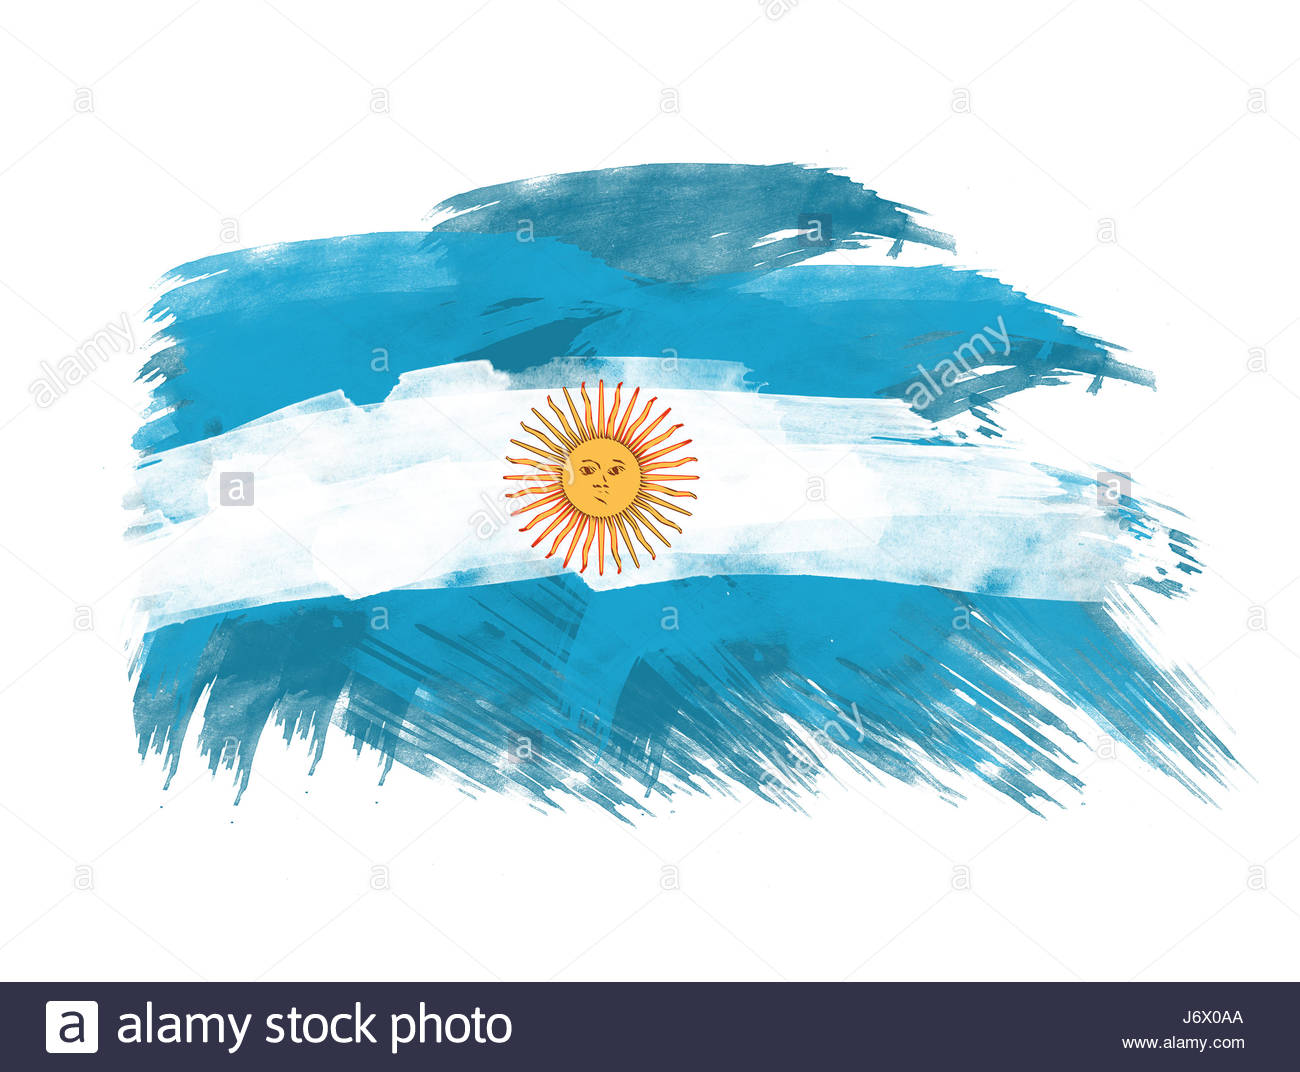 [44+] Argentina Background | WallpaperSafari.com